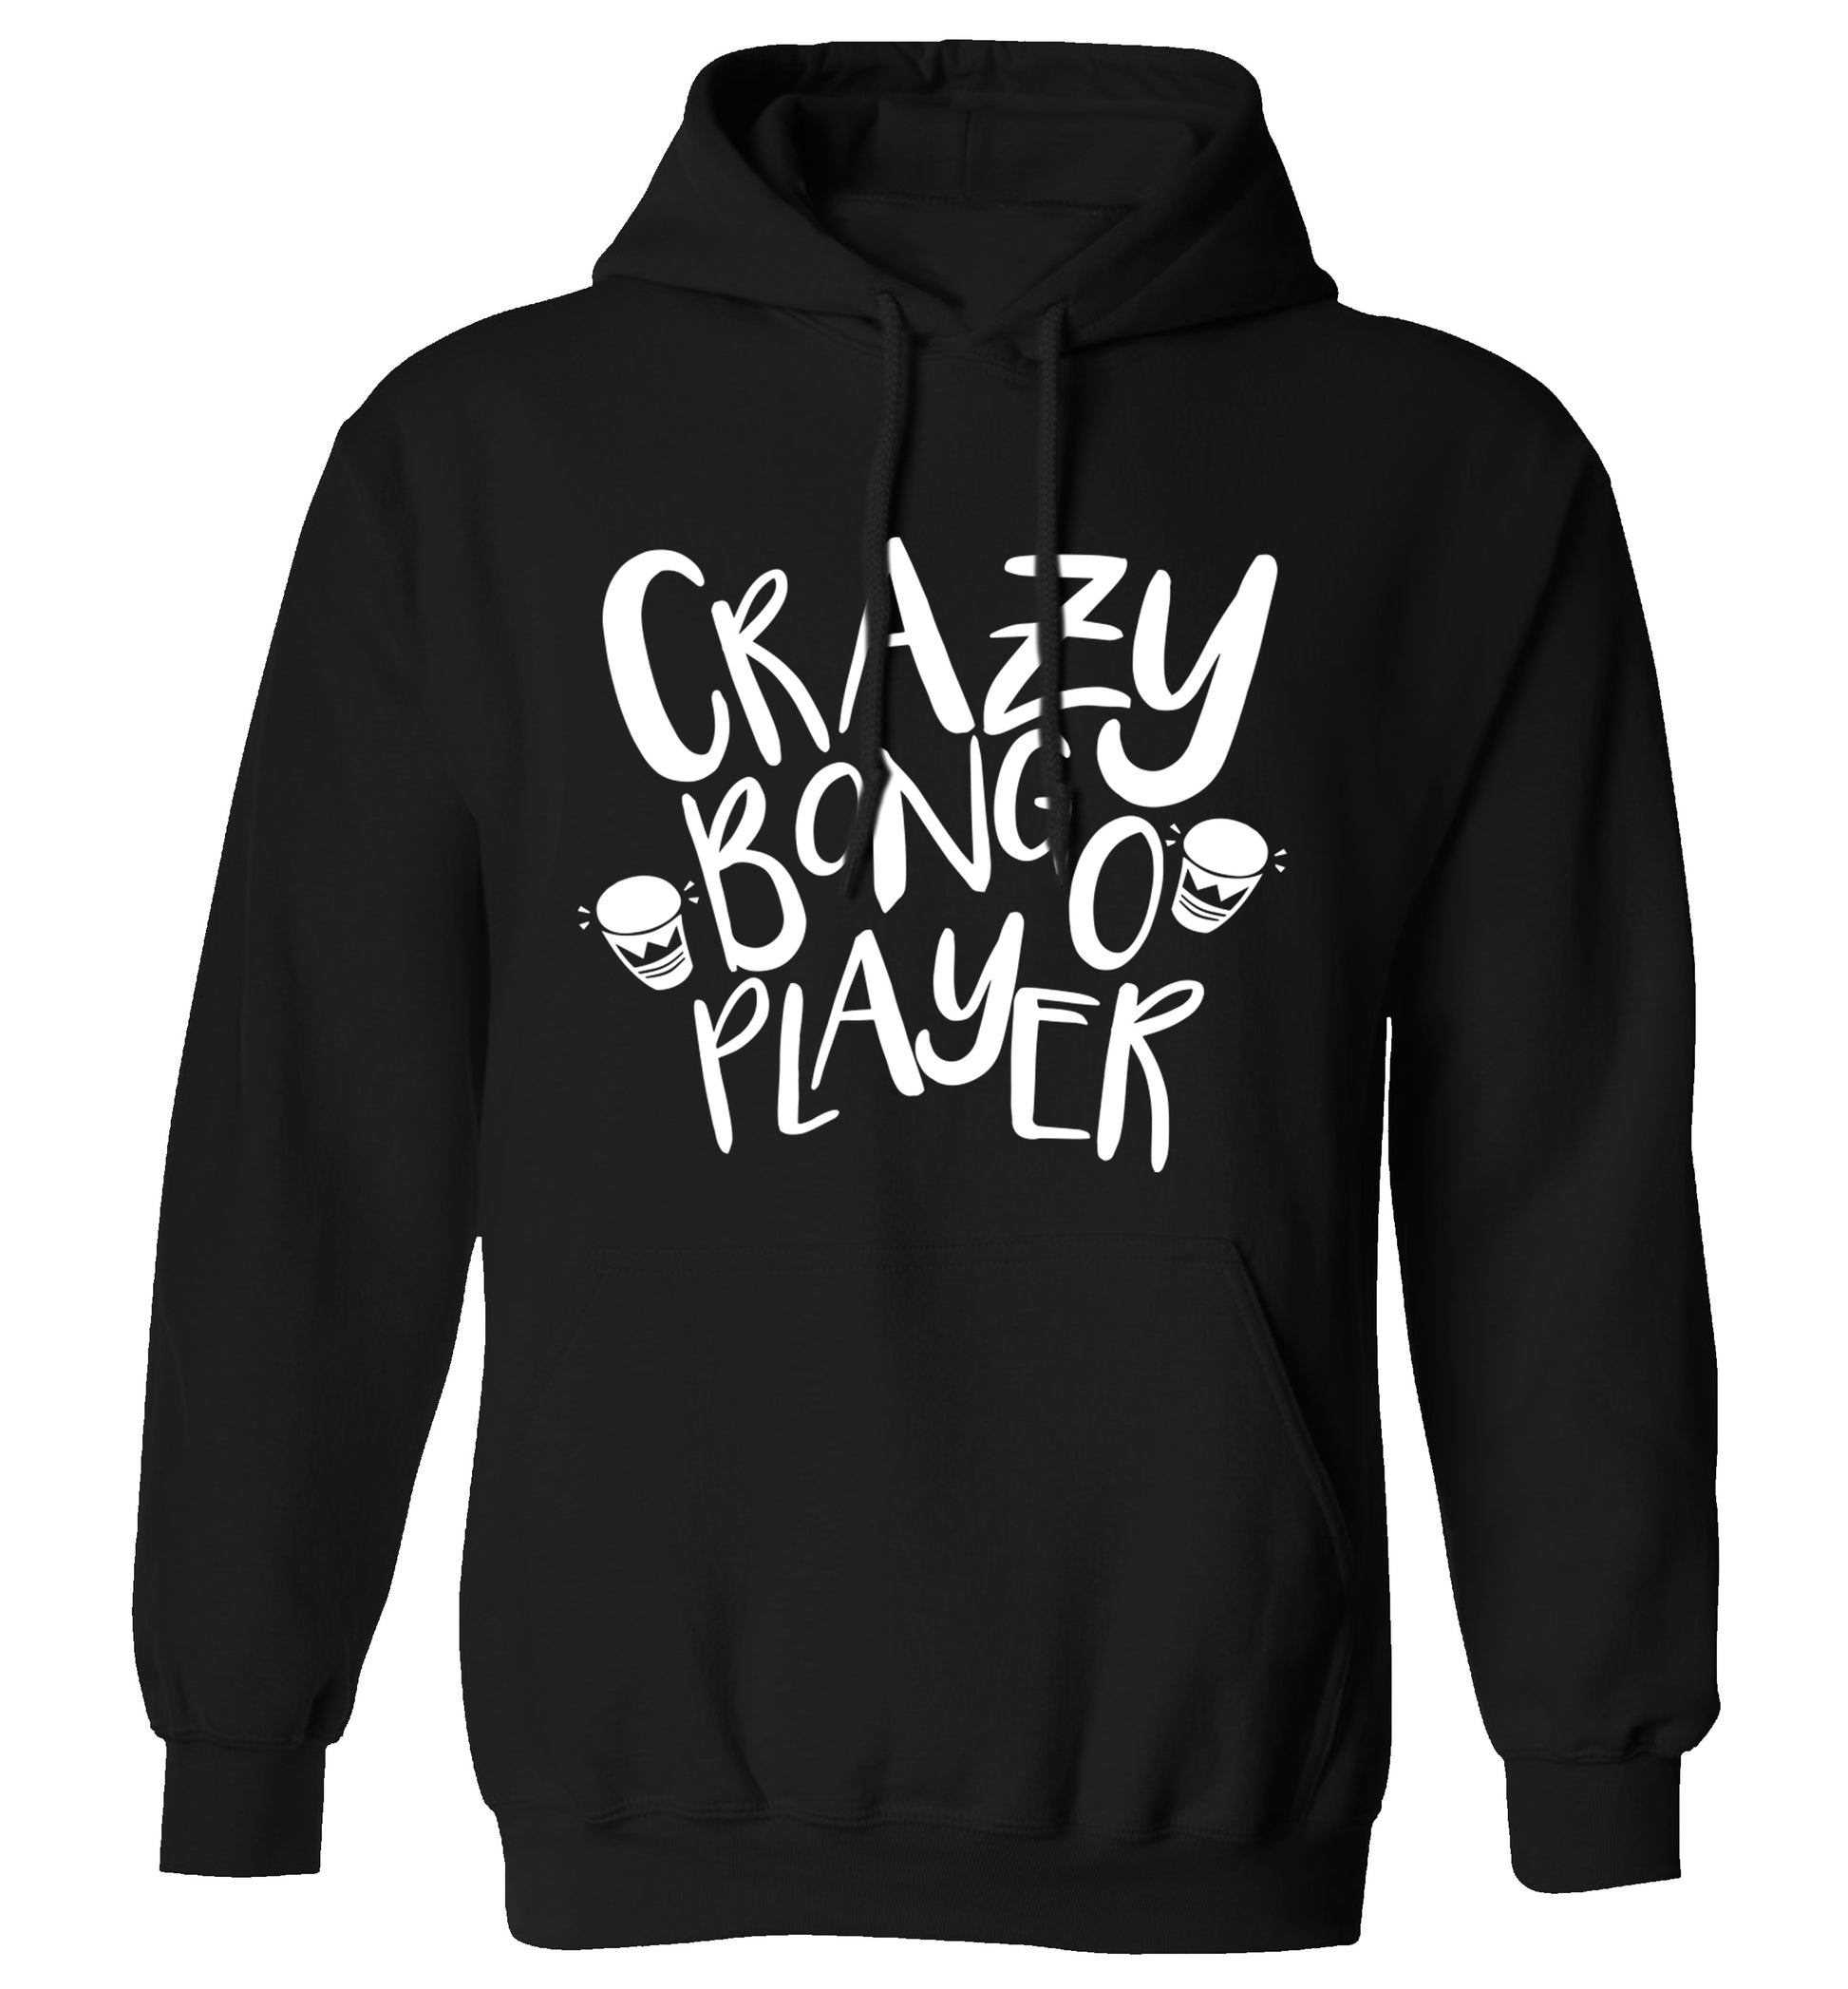 Crazy bongo player adults unisex black hoodie 2XL